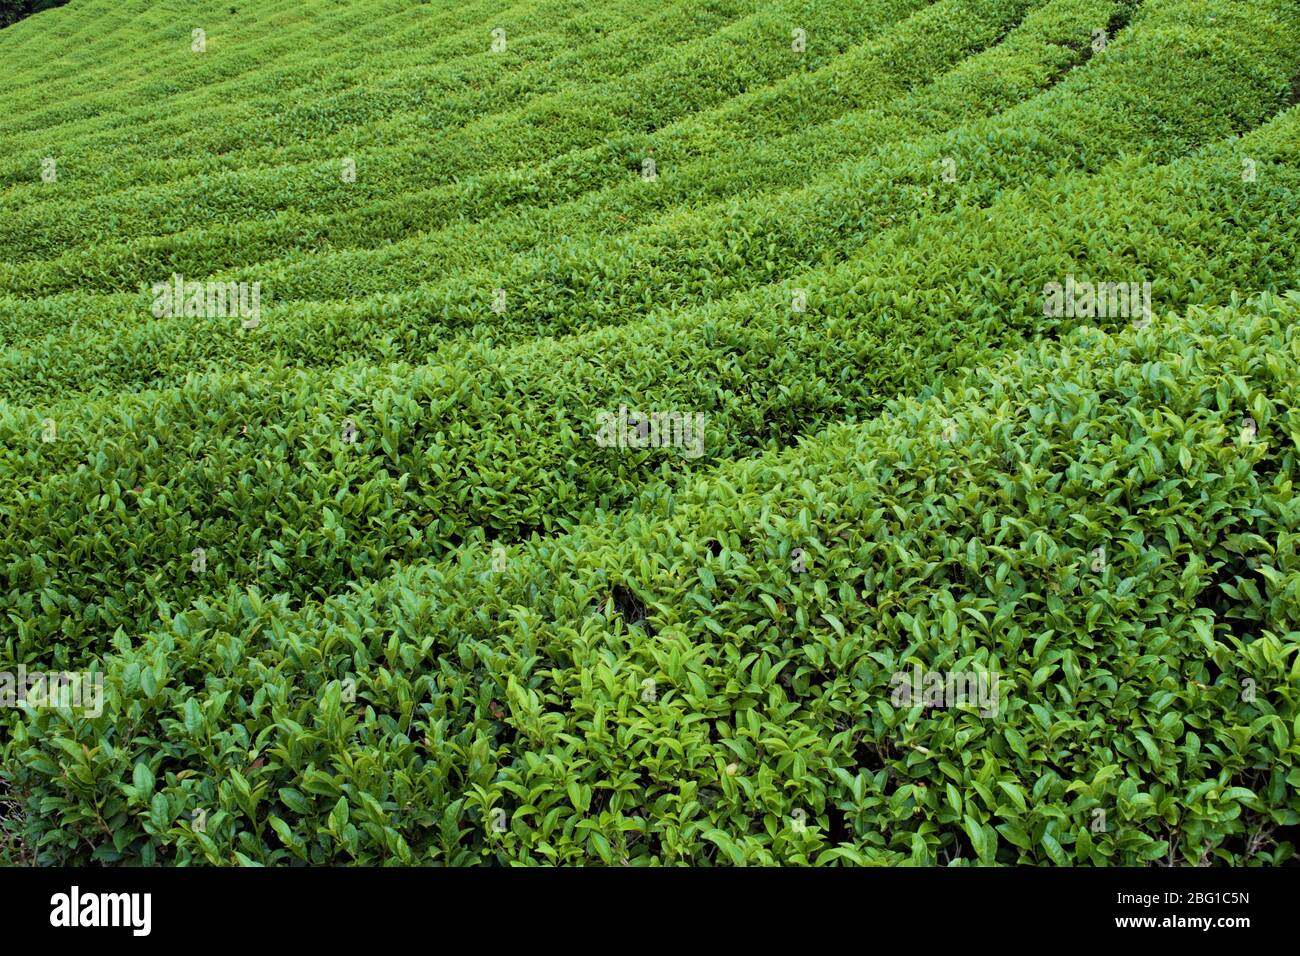 Green tea field in Boseong, South Jeolla Province, Korea Stock Photo